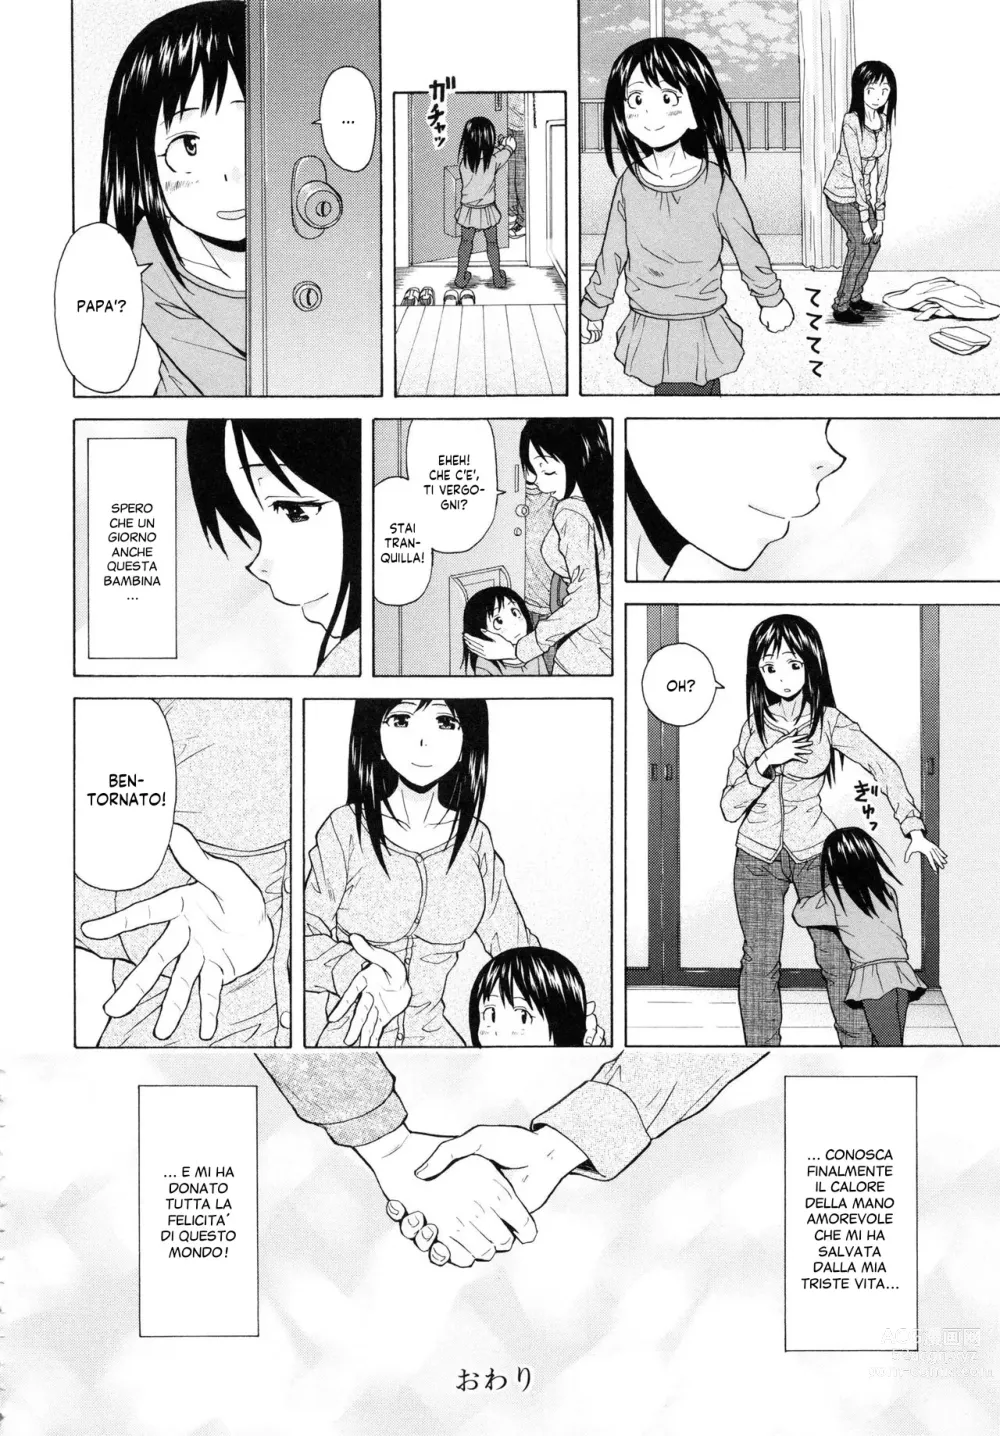 Page 246 of manga Cugine e Cognate...